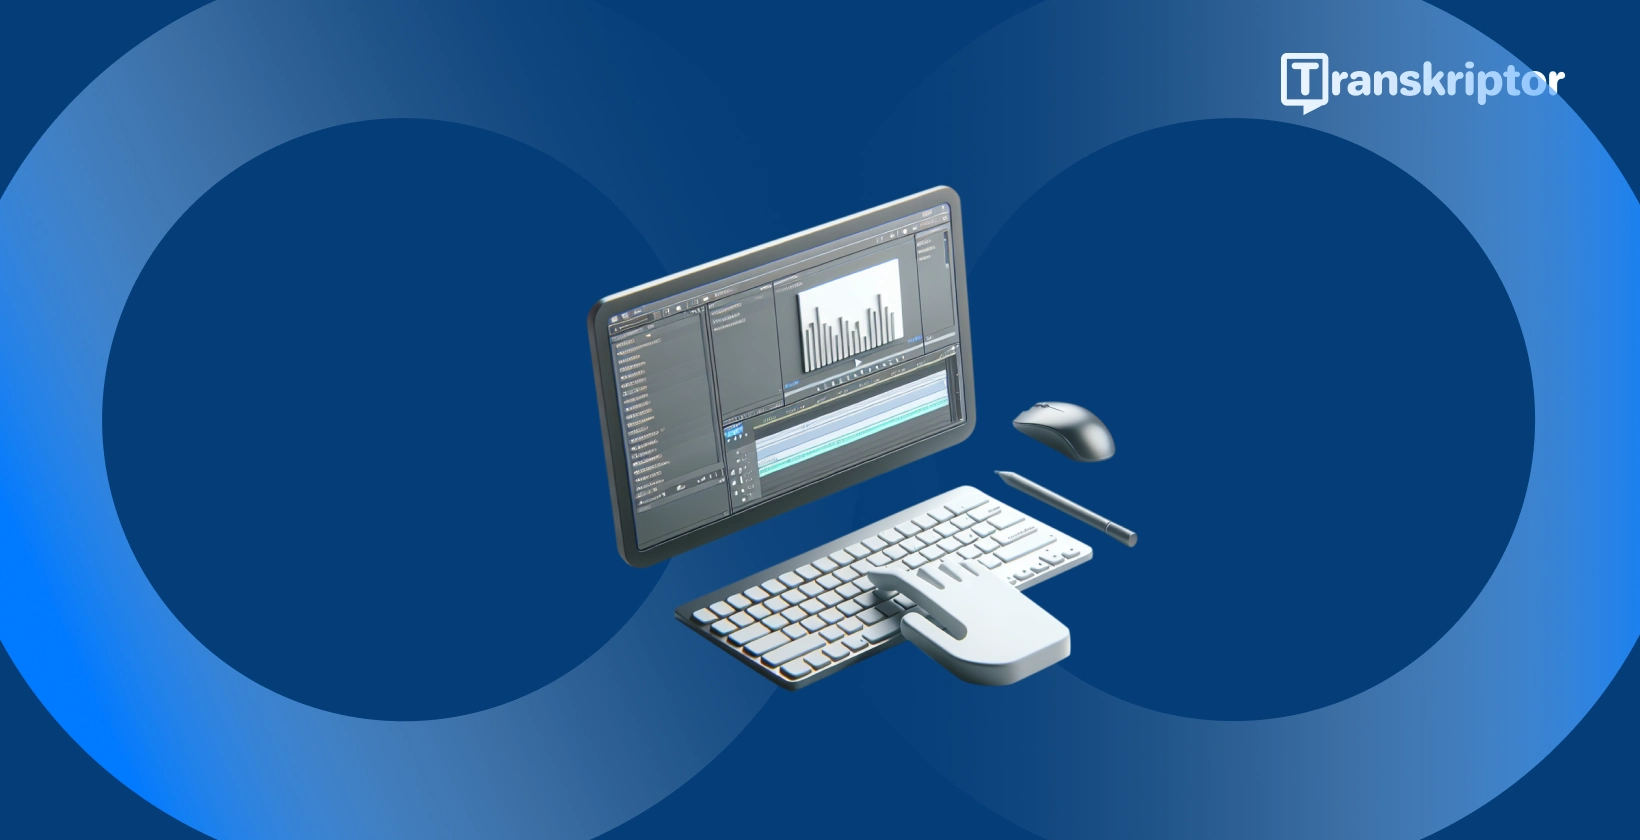 Shotcut λογισμικό επεξεργασίας βίντεο σε οθόνη με εργαλεία κυματομορφής και κειμένου, για την προσθήκη λεζάντων και τίτλων σε βίντεο.